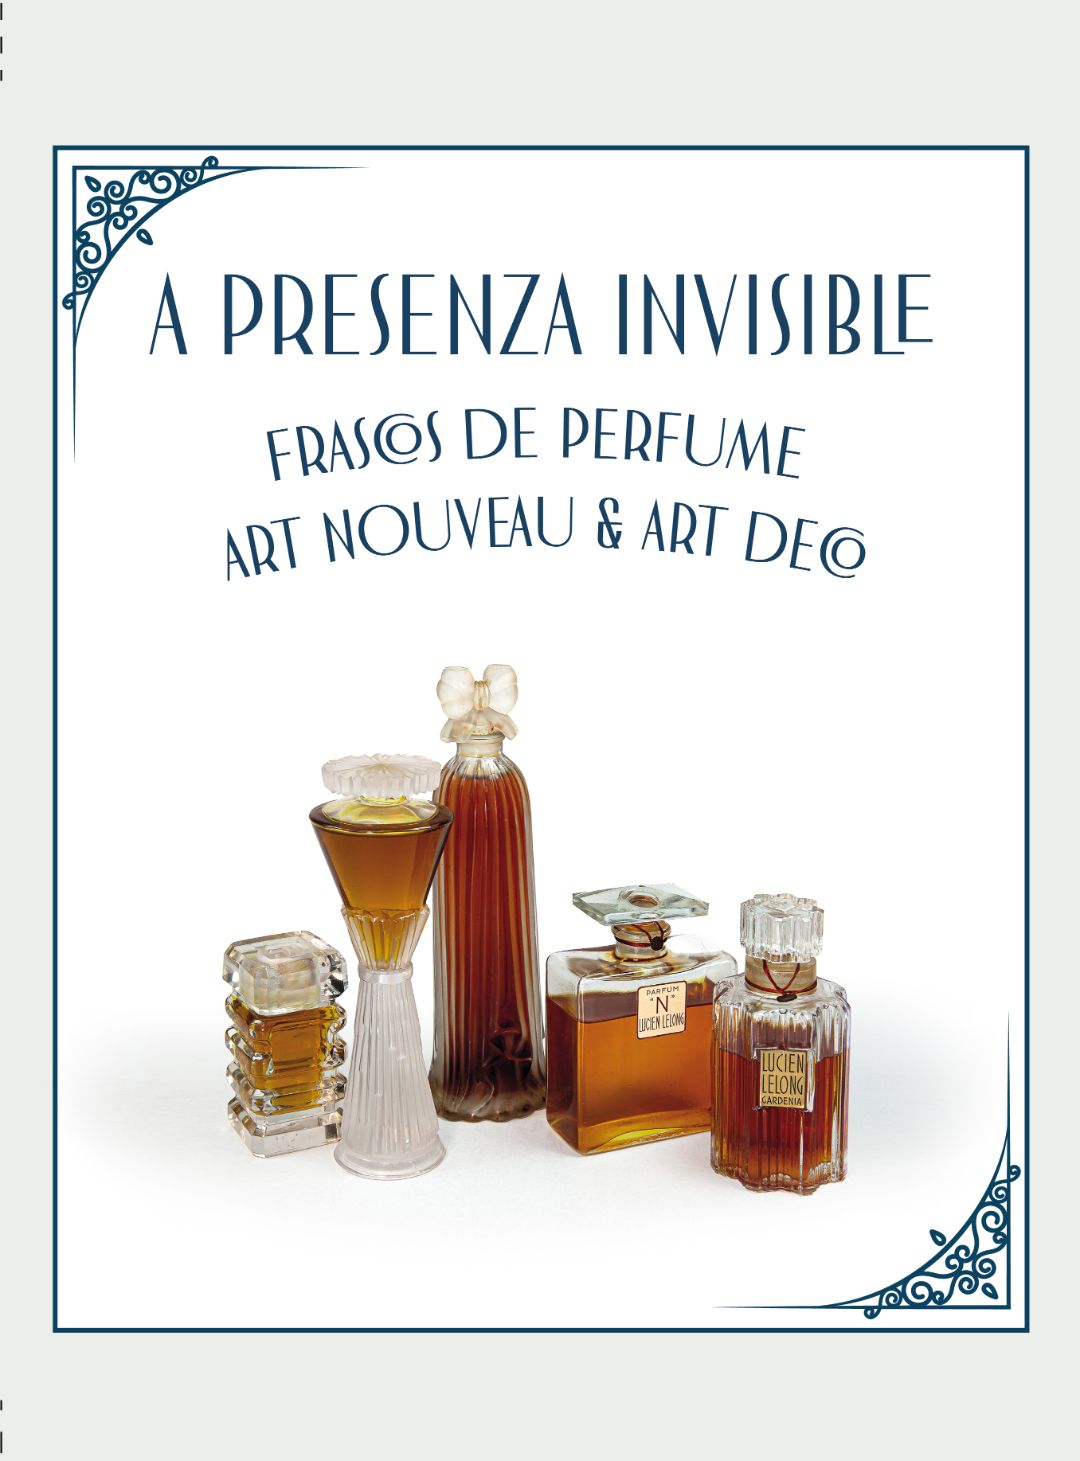 A presenza invisible. Frascos de perfume art nouveau & art déco